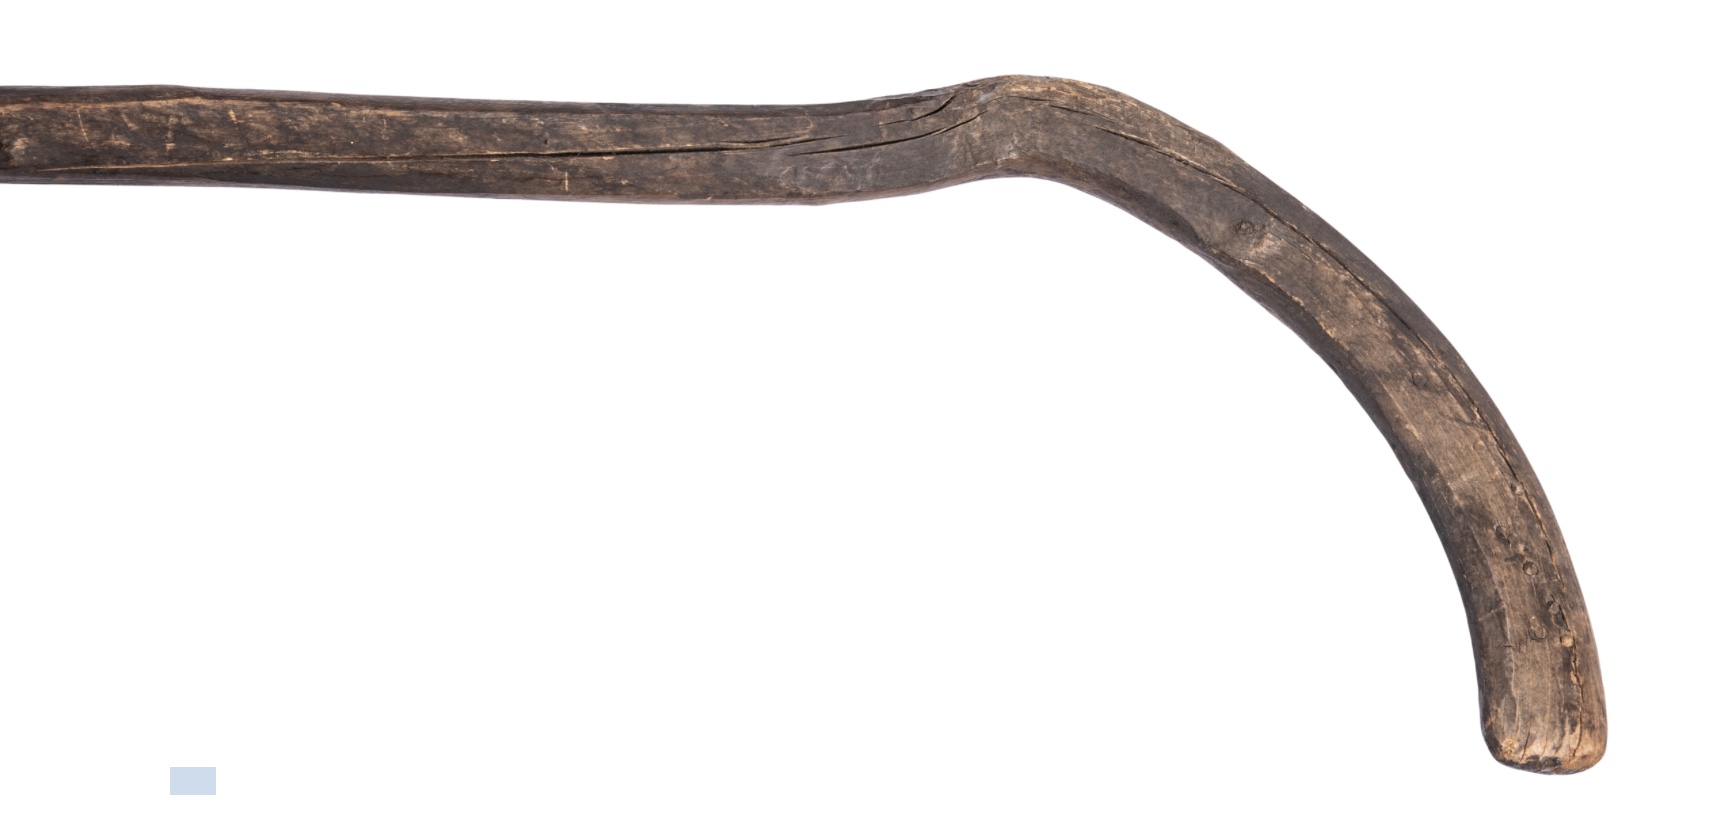 19th century hockey stick